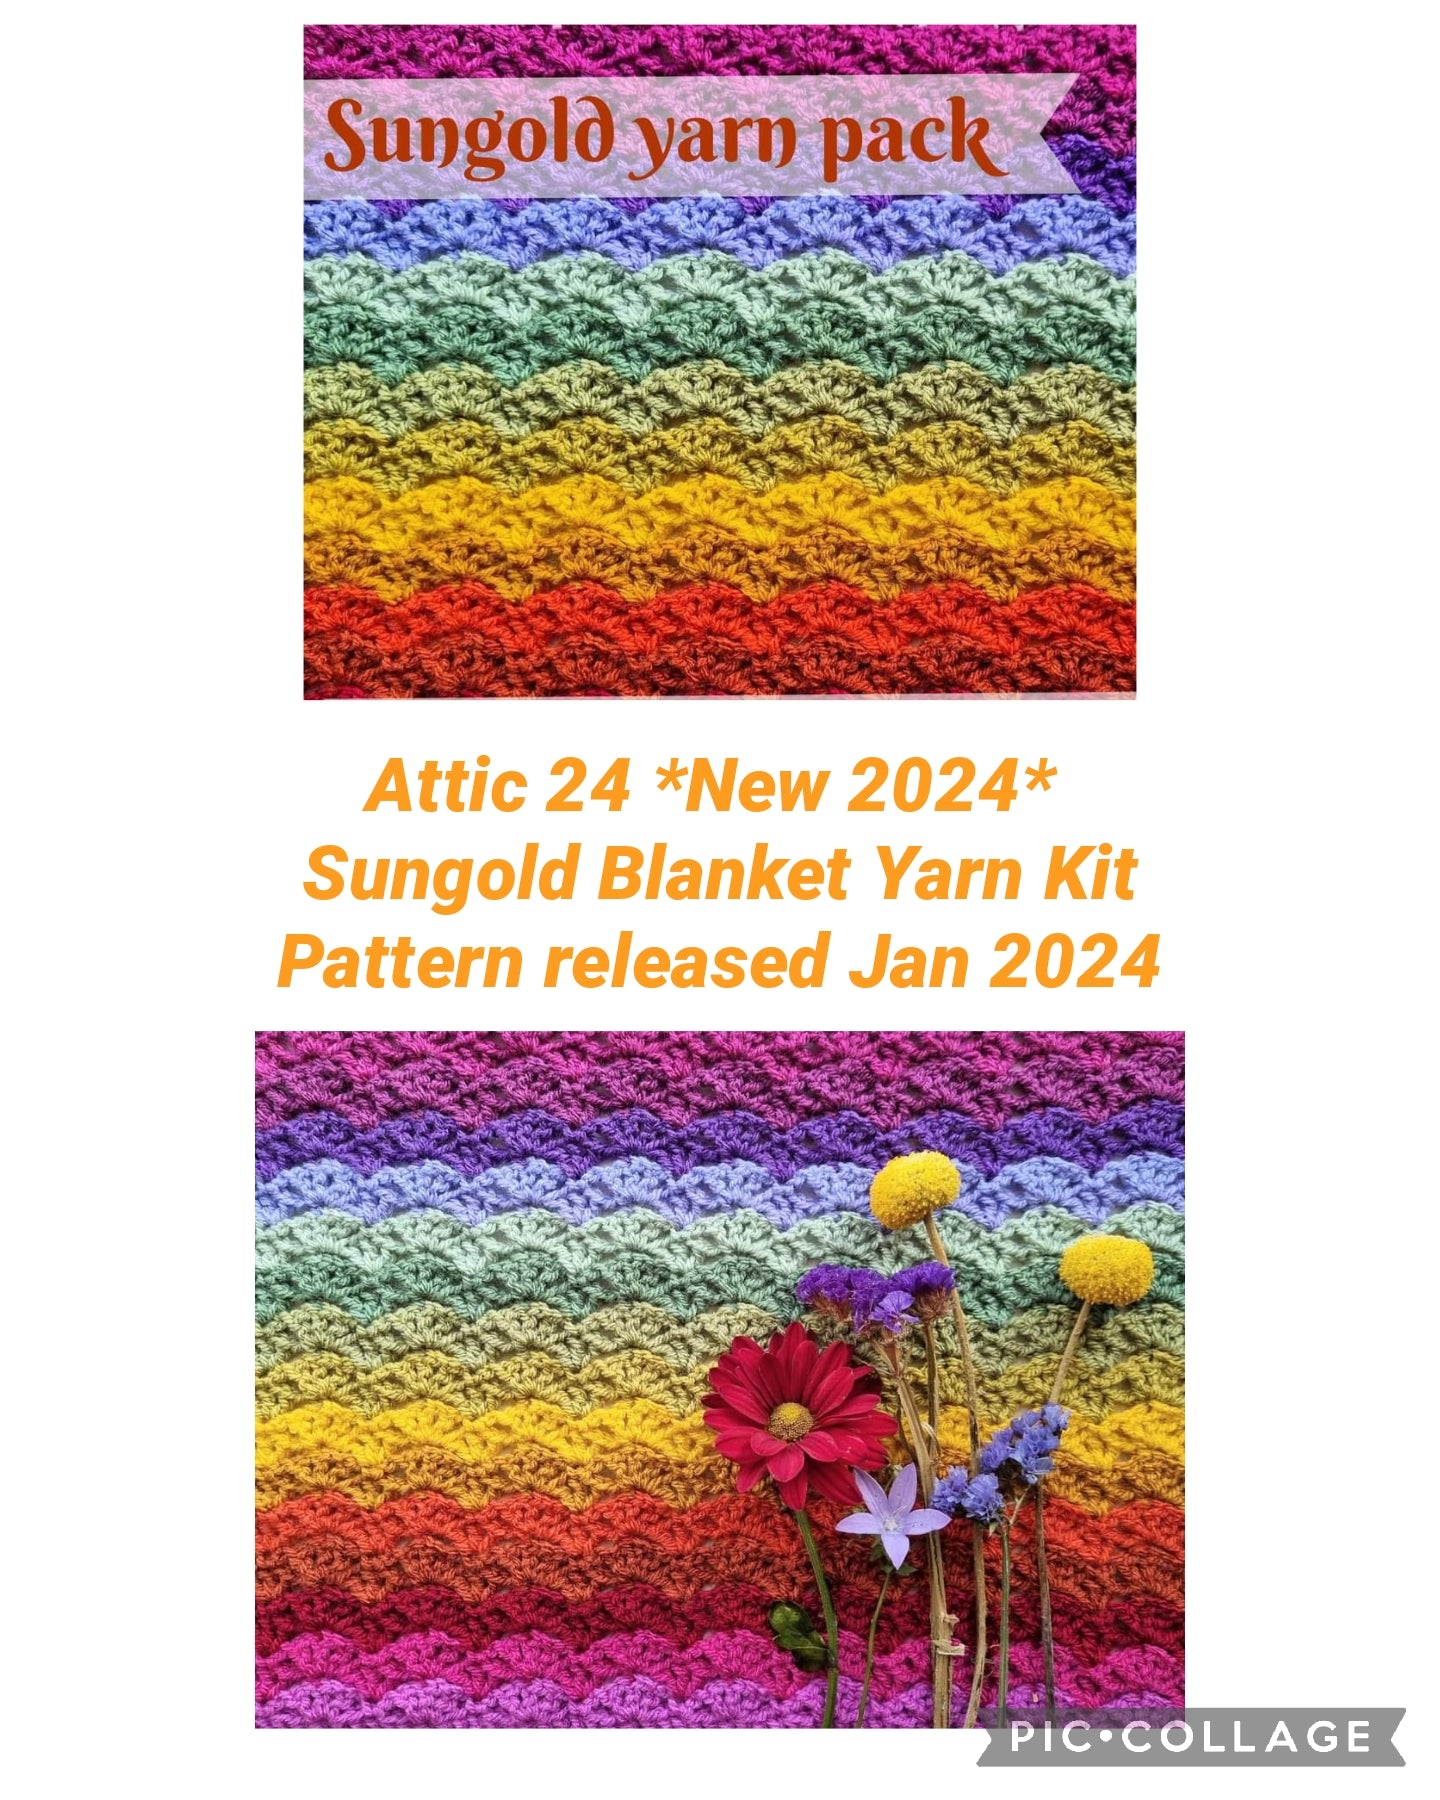 *New* 2024 Attic 24 Sungold Blanket Yarn Kit